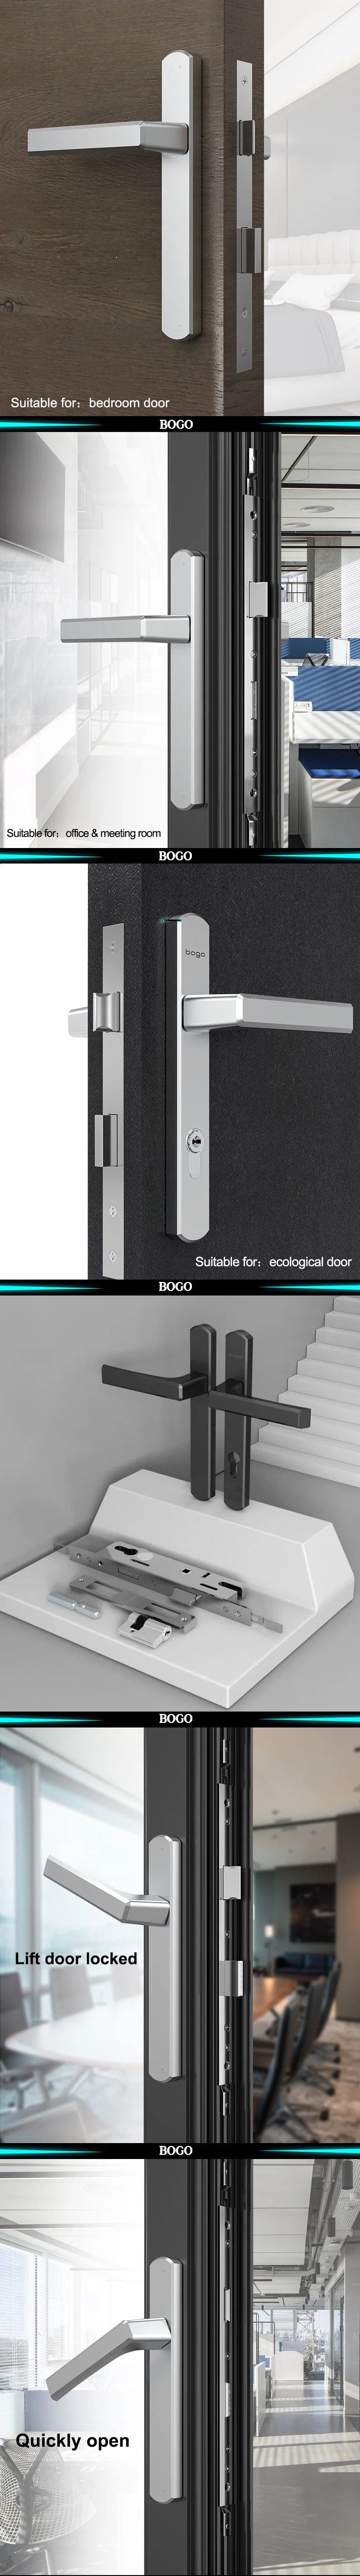 Extra Lock for Apartment Door Get Broken Key out of Lock Indicator Bolt